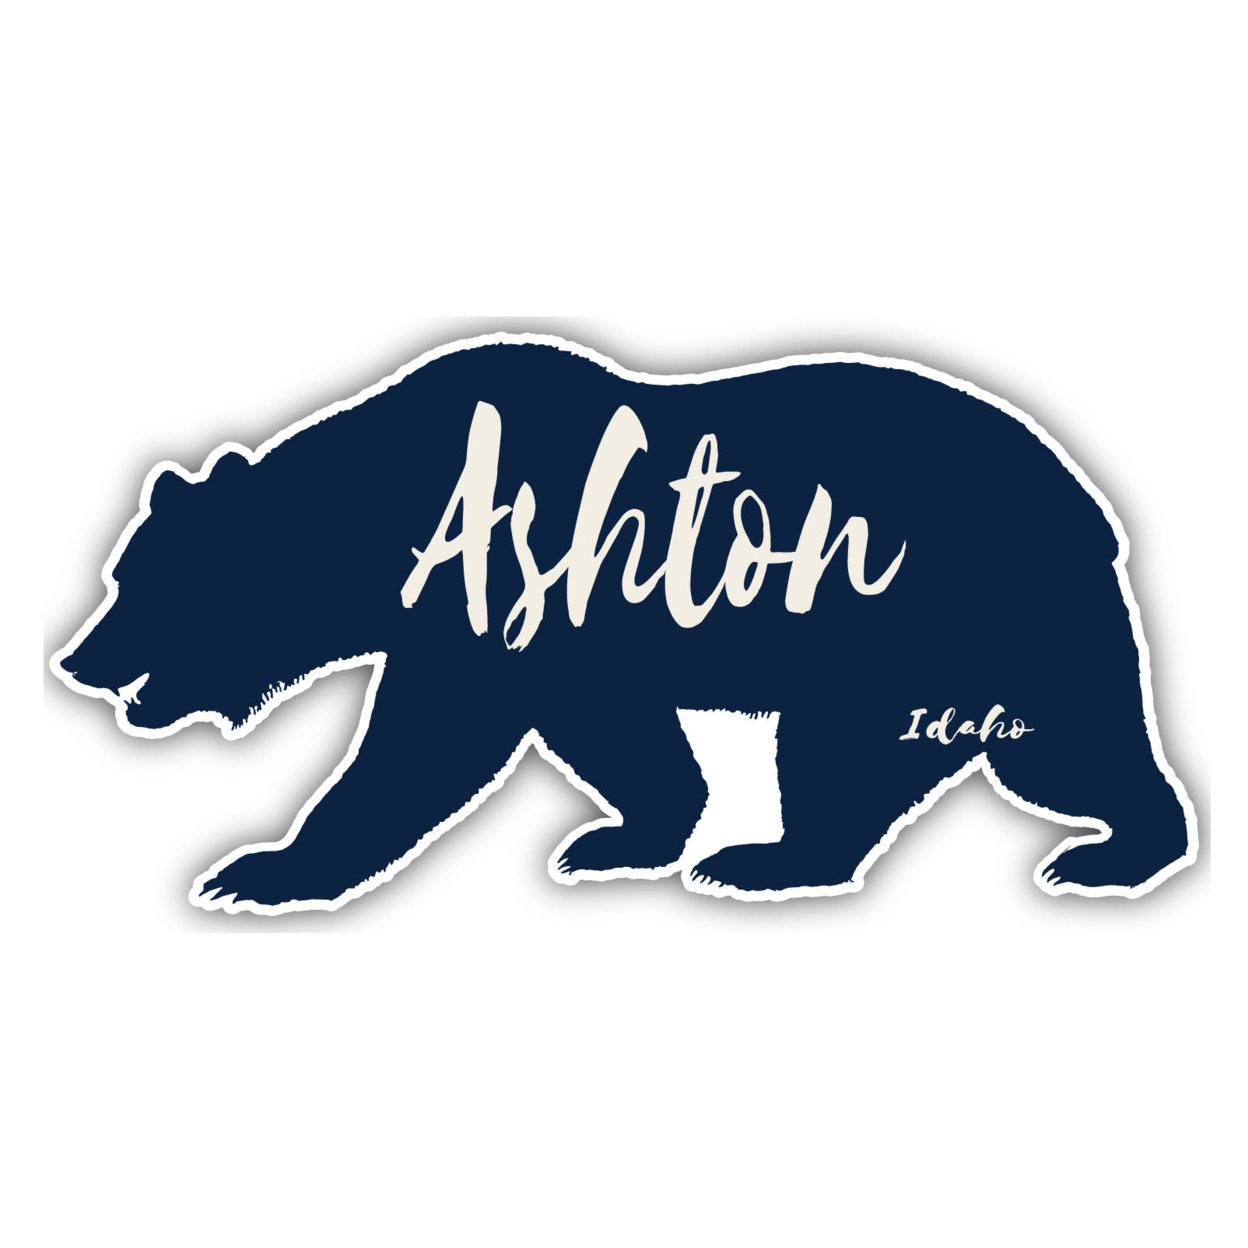 Ashton Idaho Souvenir Decorative Stickers (Choose Theme And Size) - 4-Pack, 10-Inch, Adventures Awaits